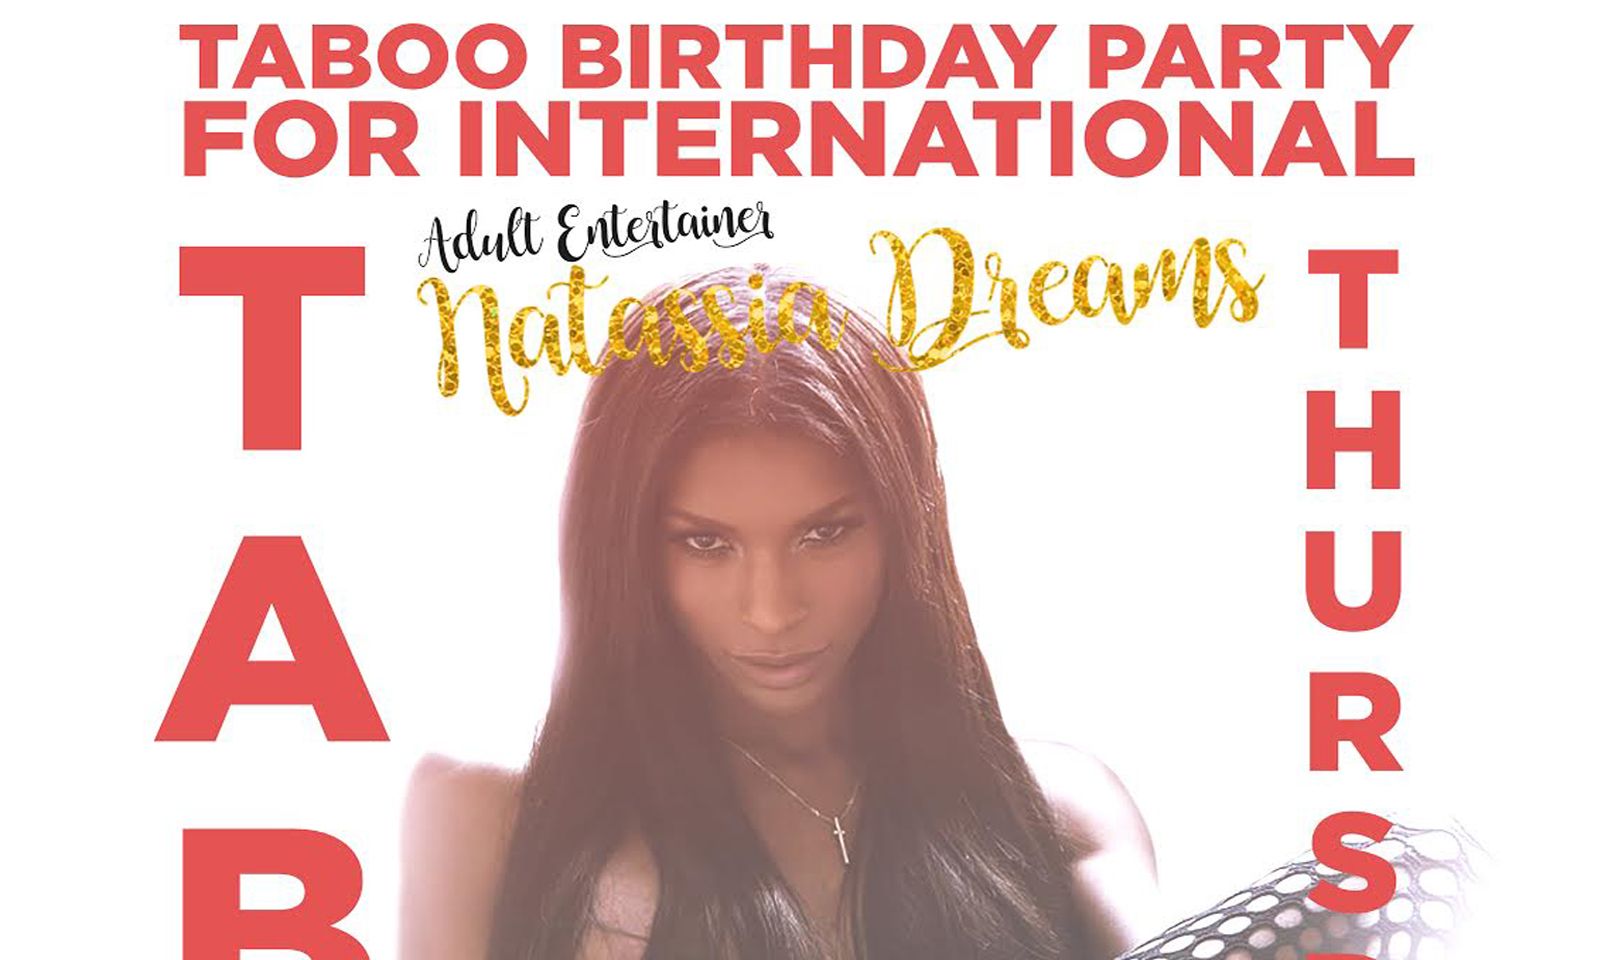 Natassia Dreams Hosts Taboo Birthday Bash at Ethyl's in NYC